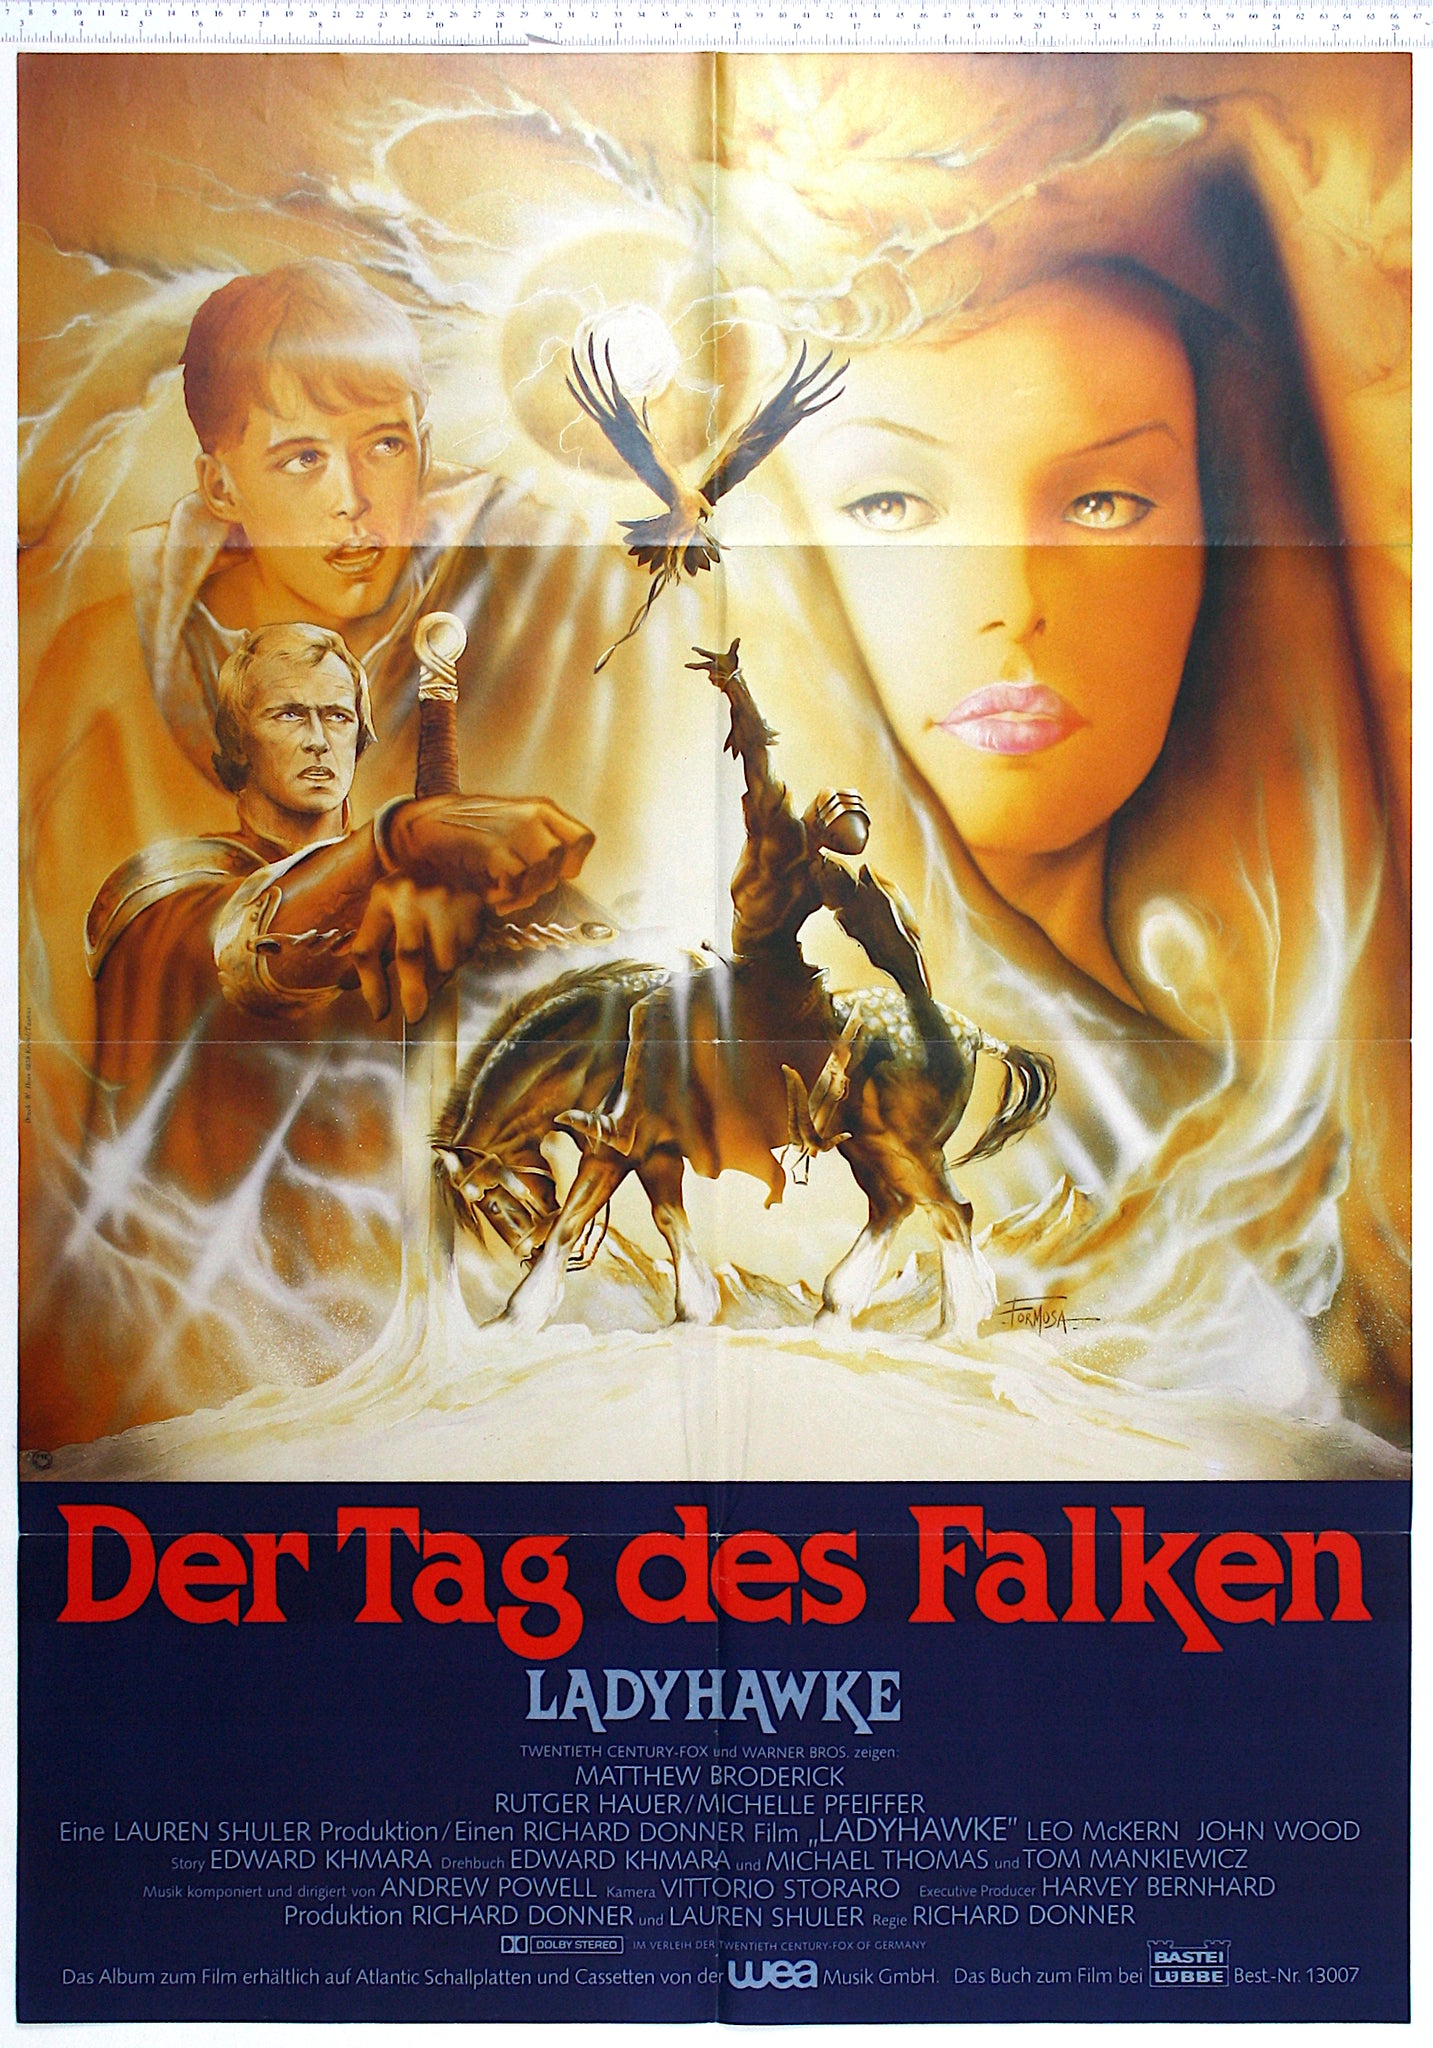 Ladyhawke (1985) German A1 Poster #New